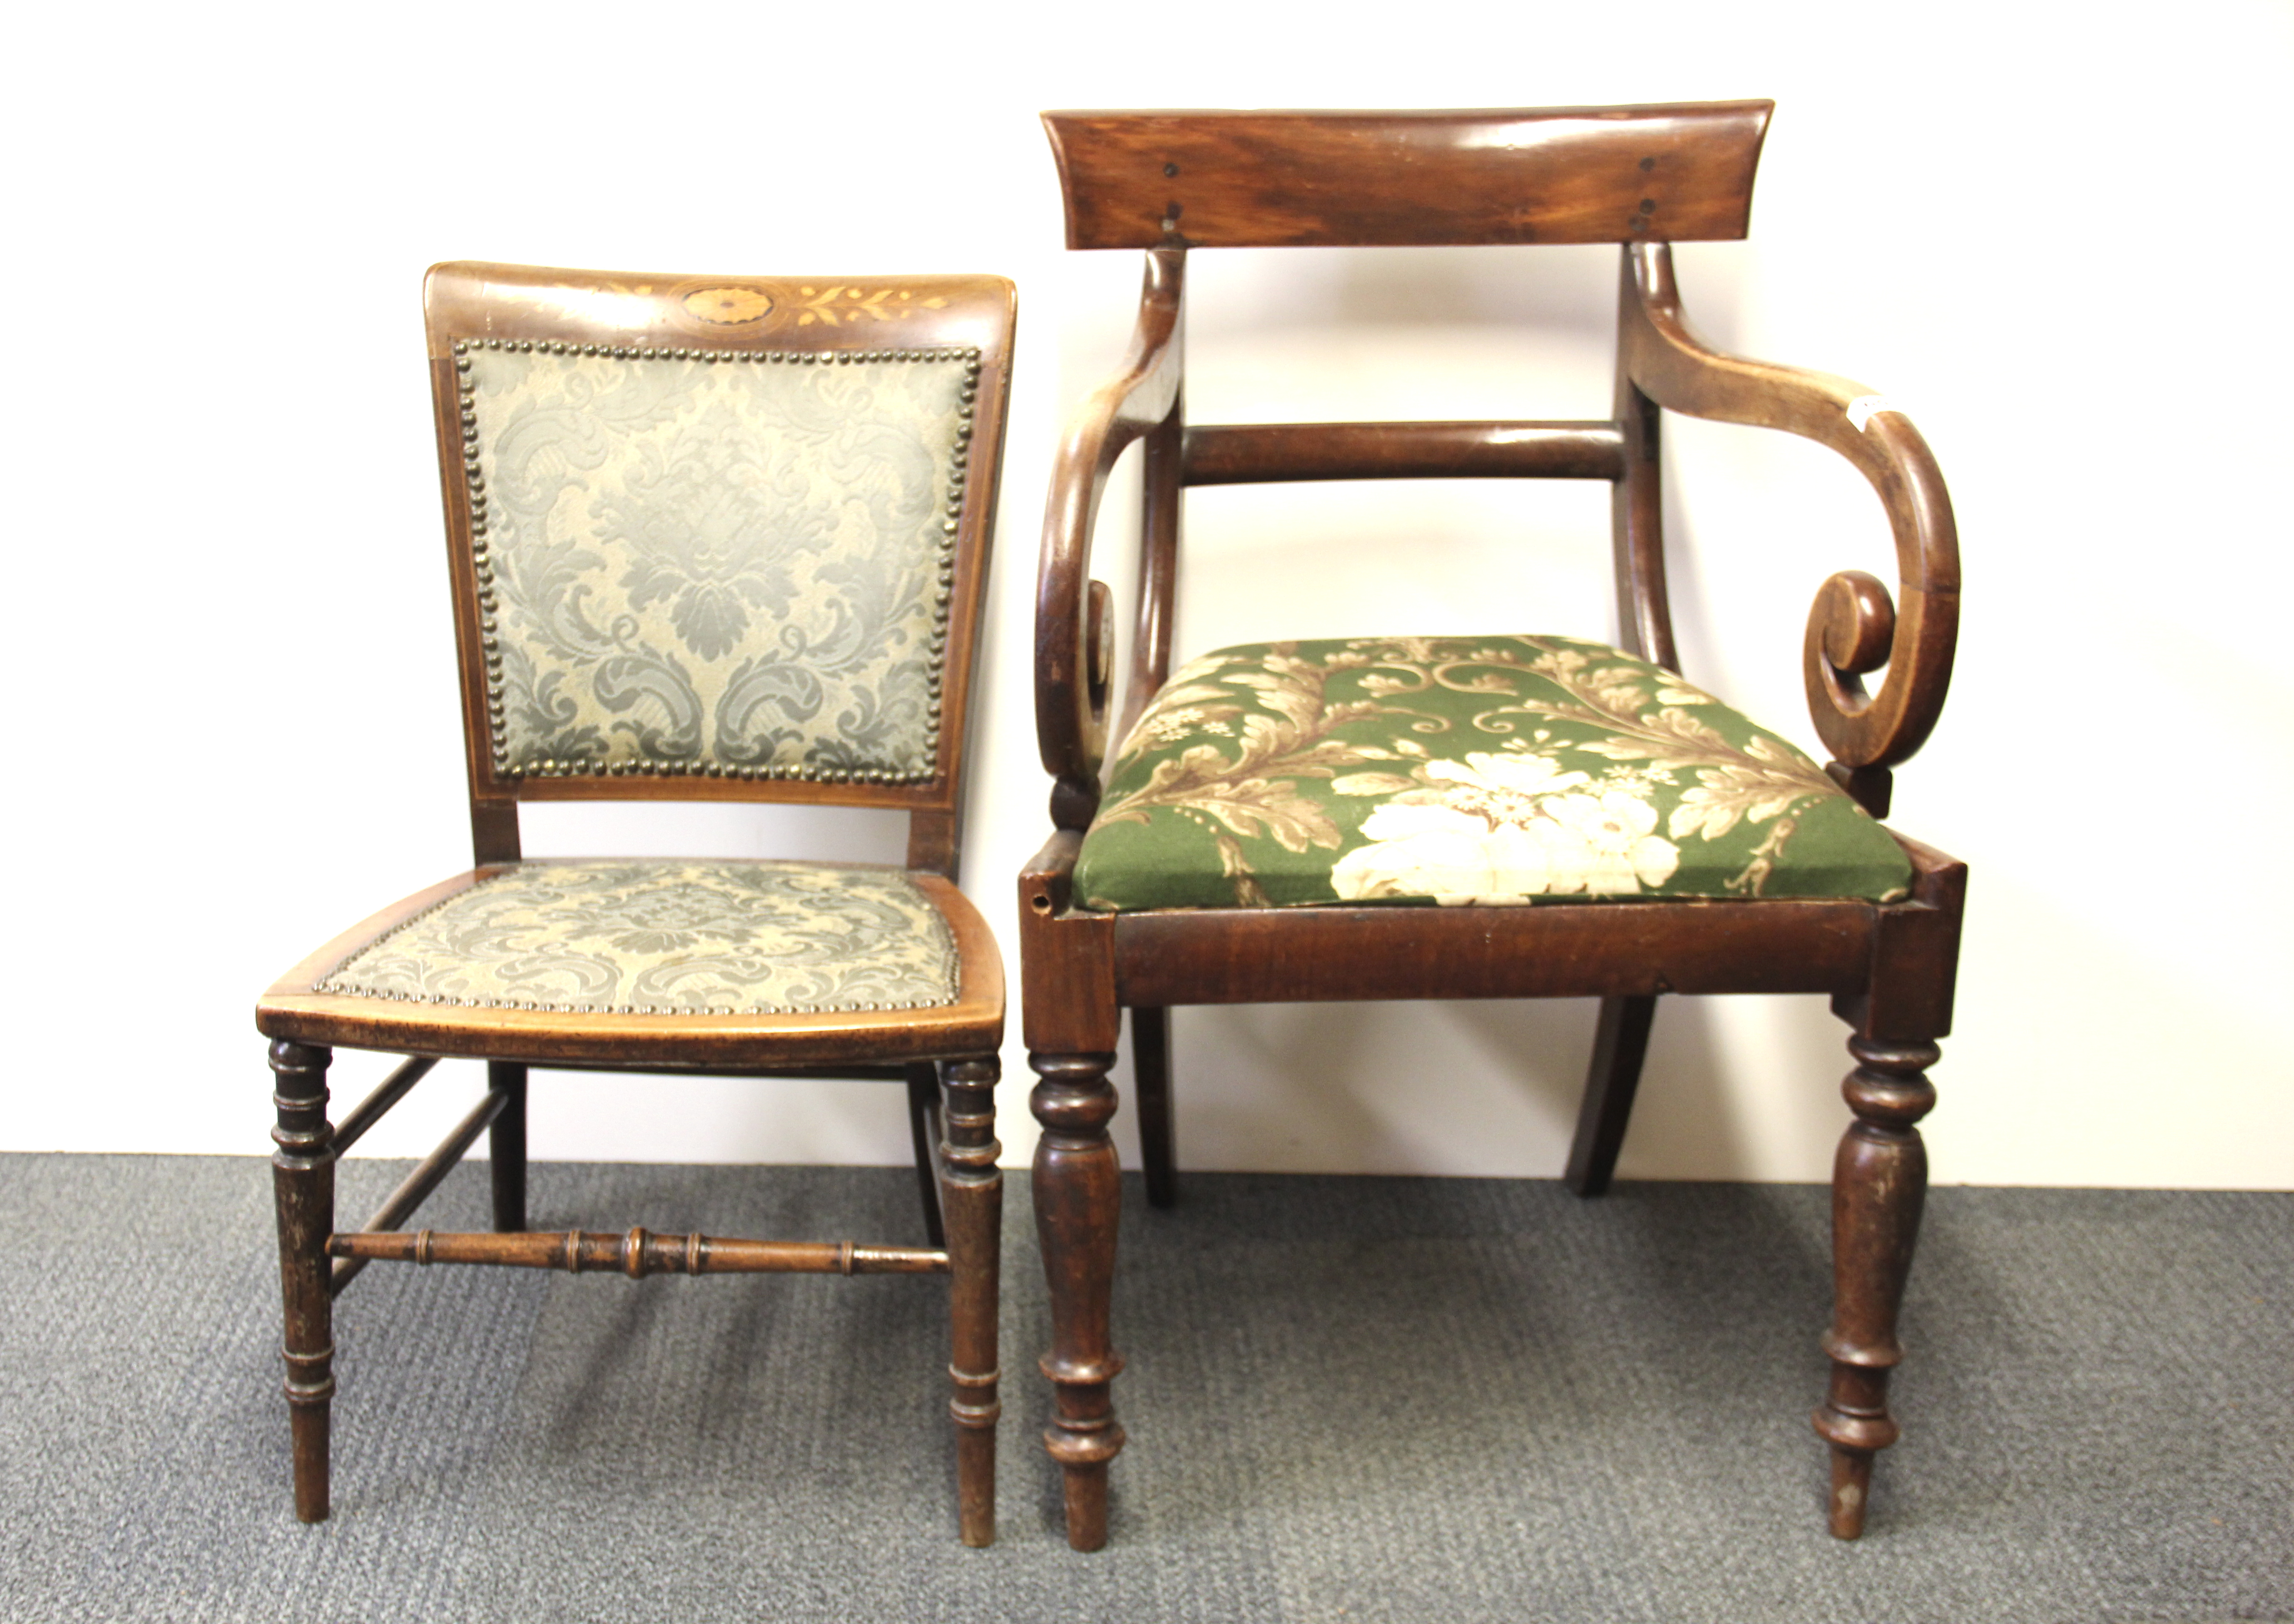 A Georgian mahogany armchair and an inlaid mahogany nursing chair.